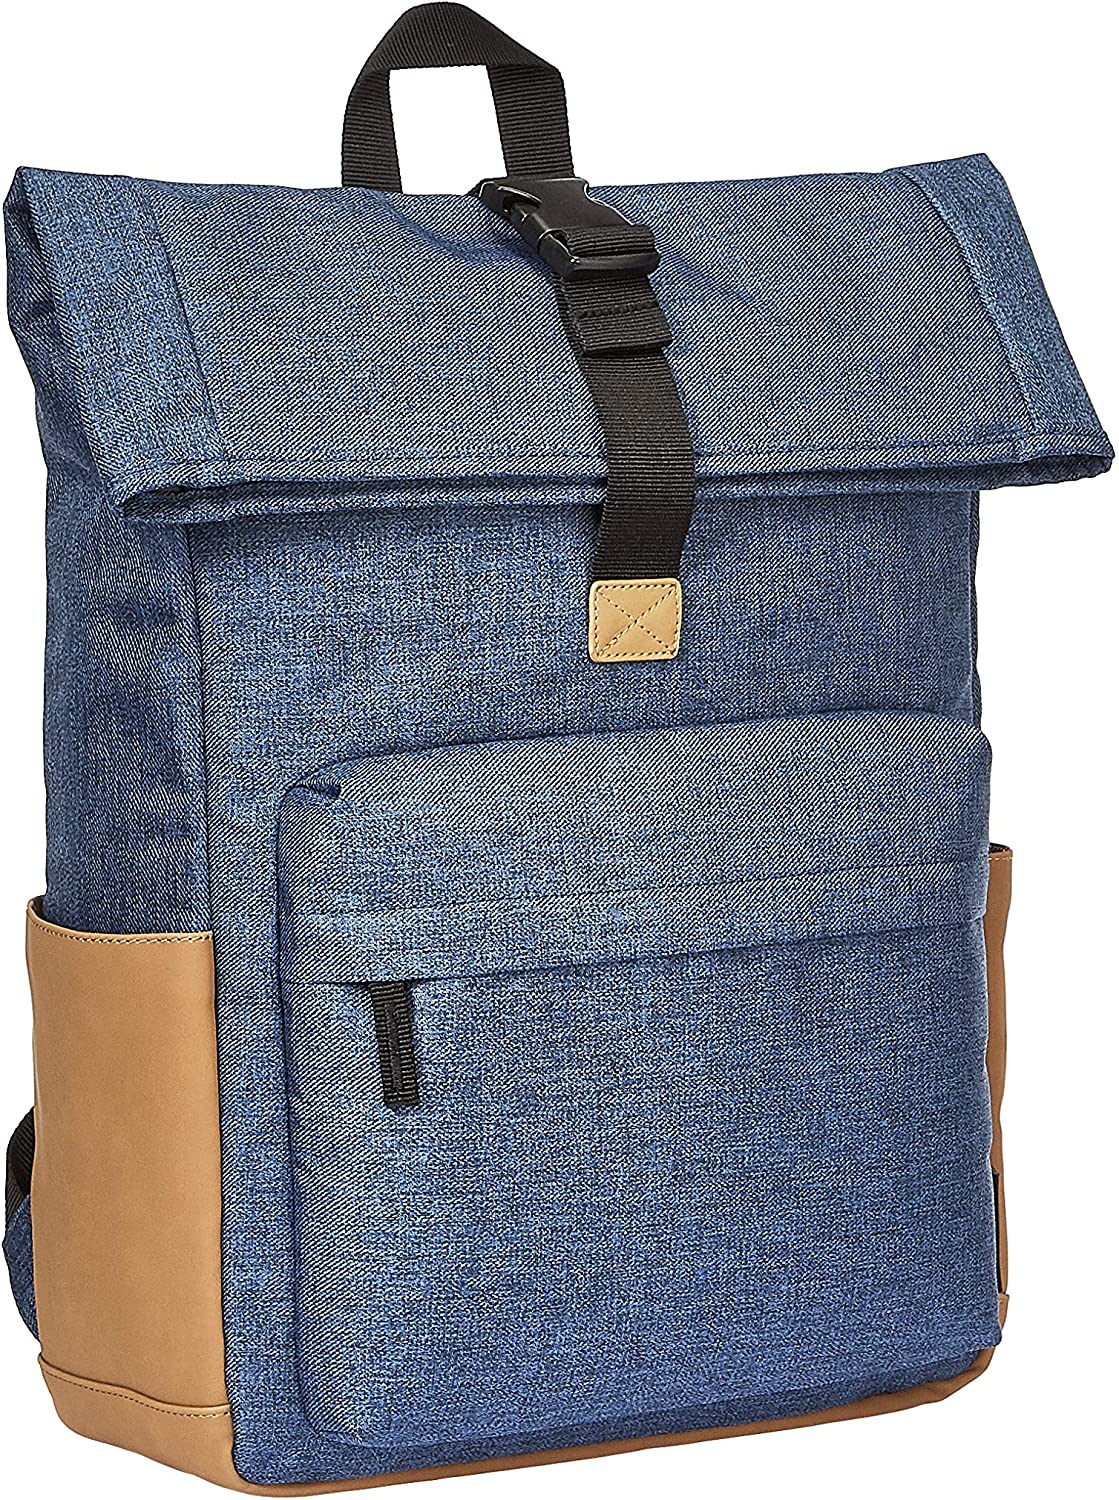 AmazonBasics Anti-Theft Roll Top Backpack